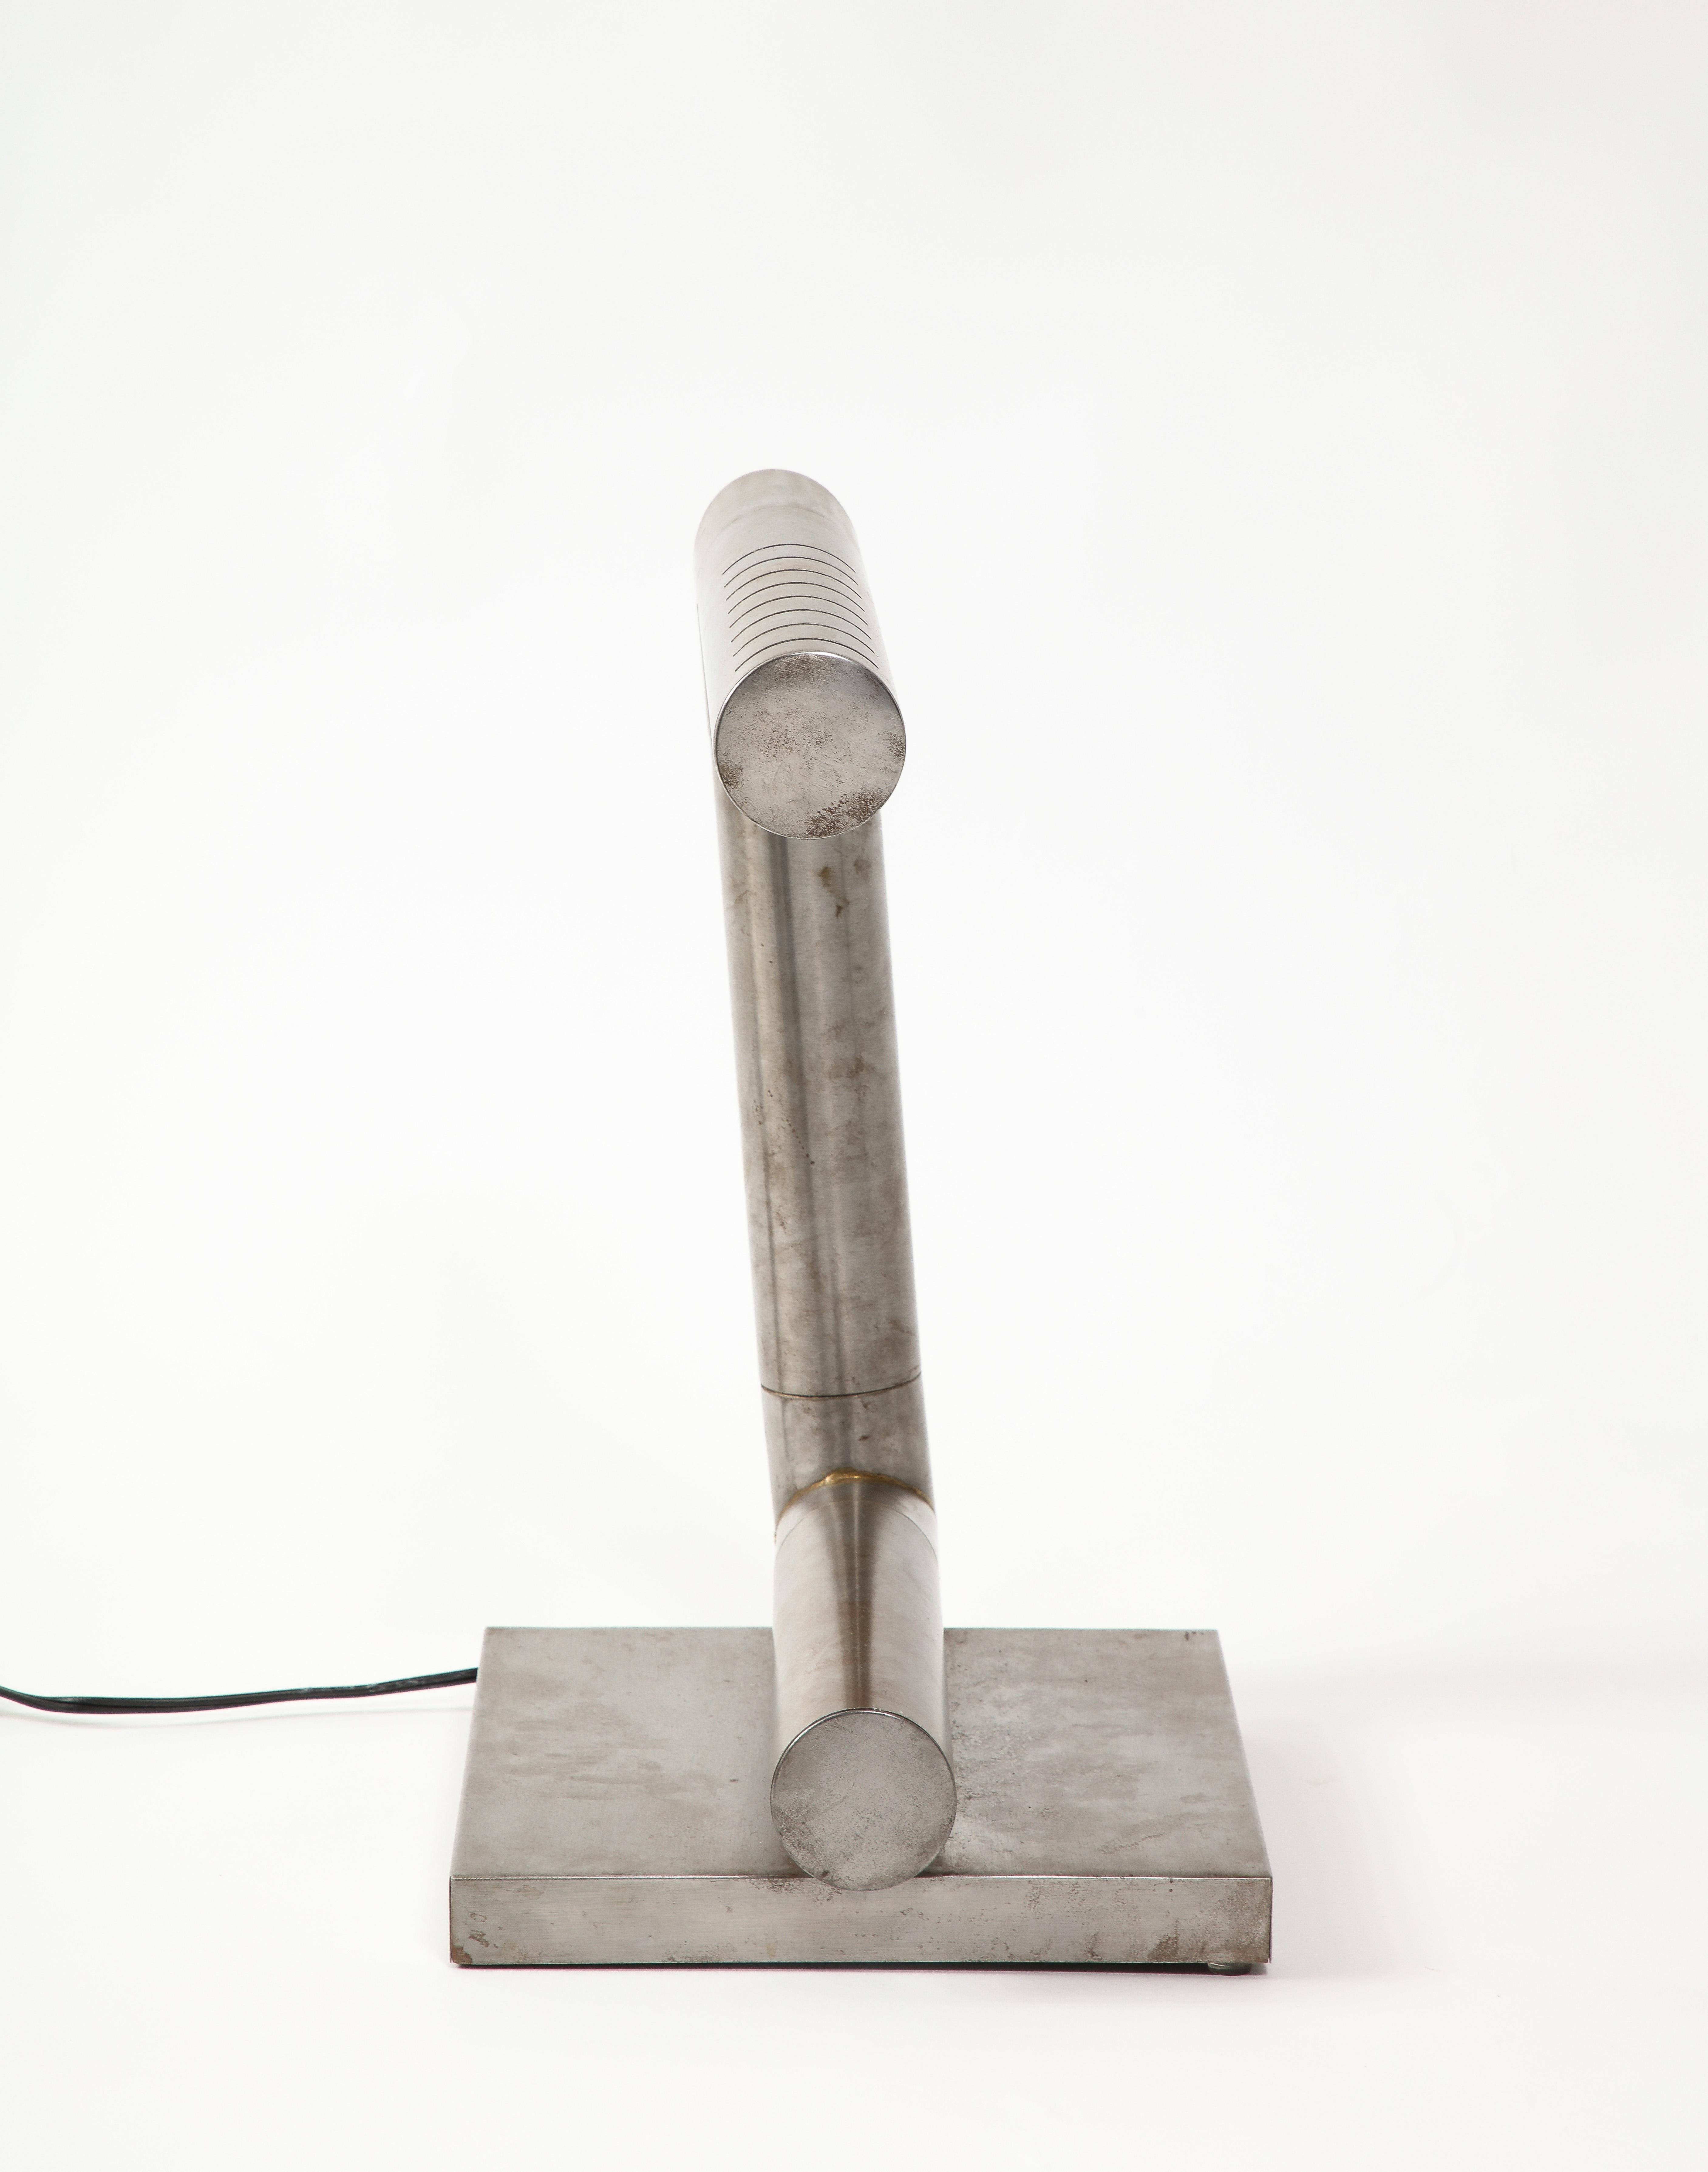 Brushed Steel Industrial Modernist Tubular Desk Task Lamp, Italy 1960's For Sale 1